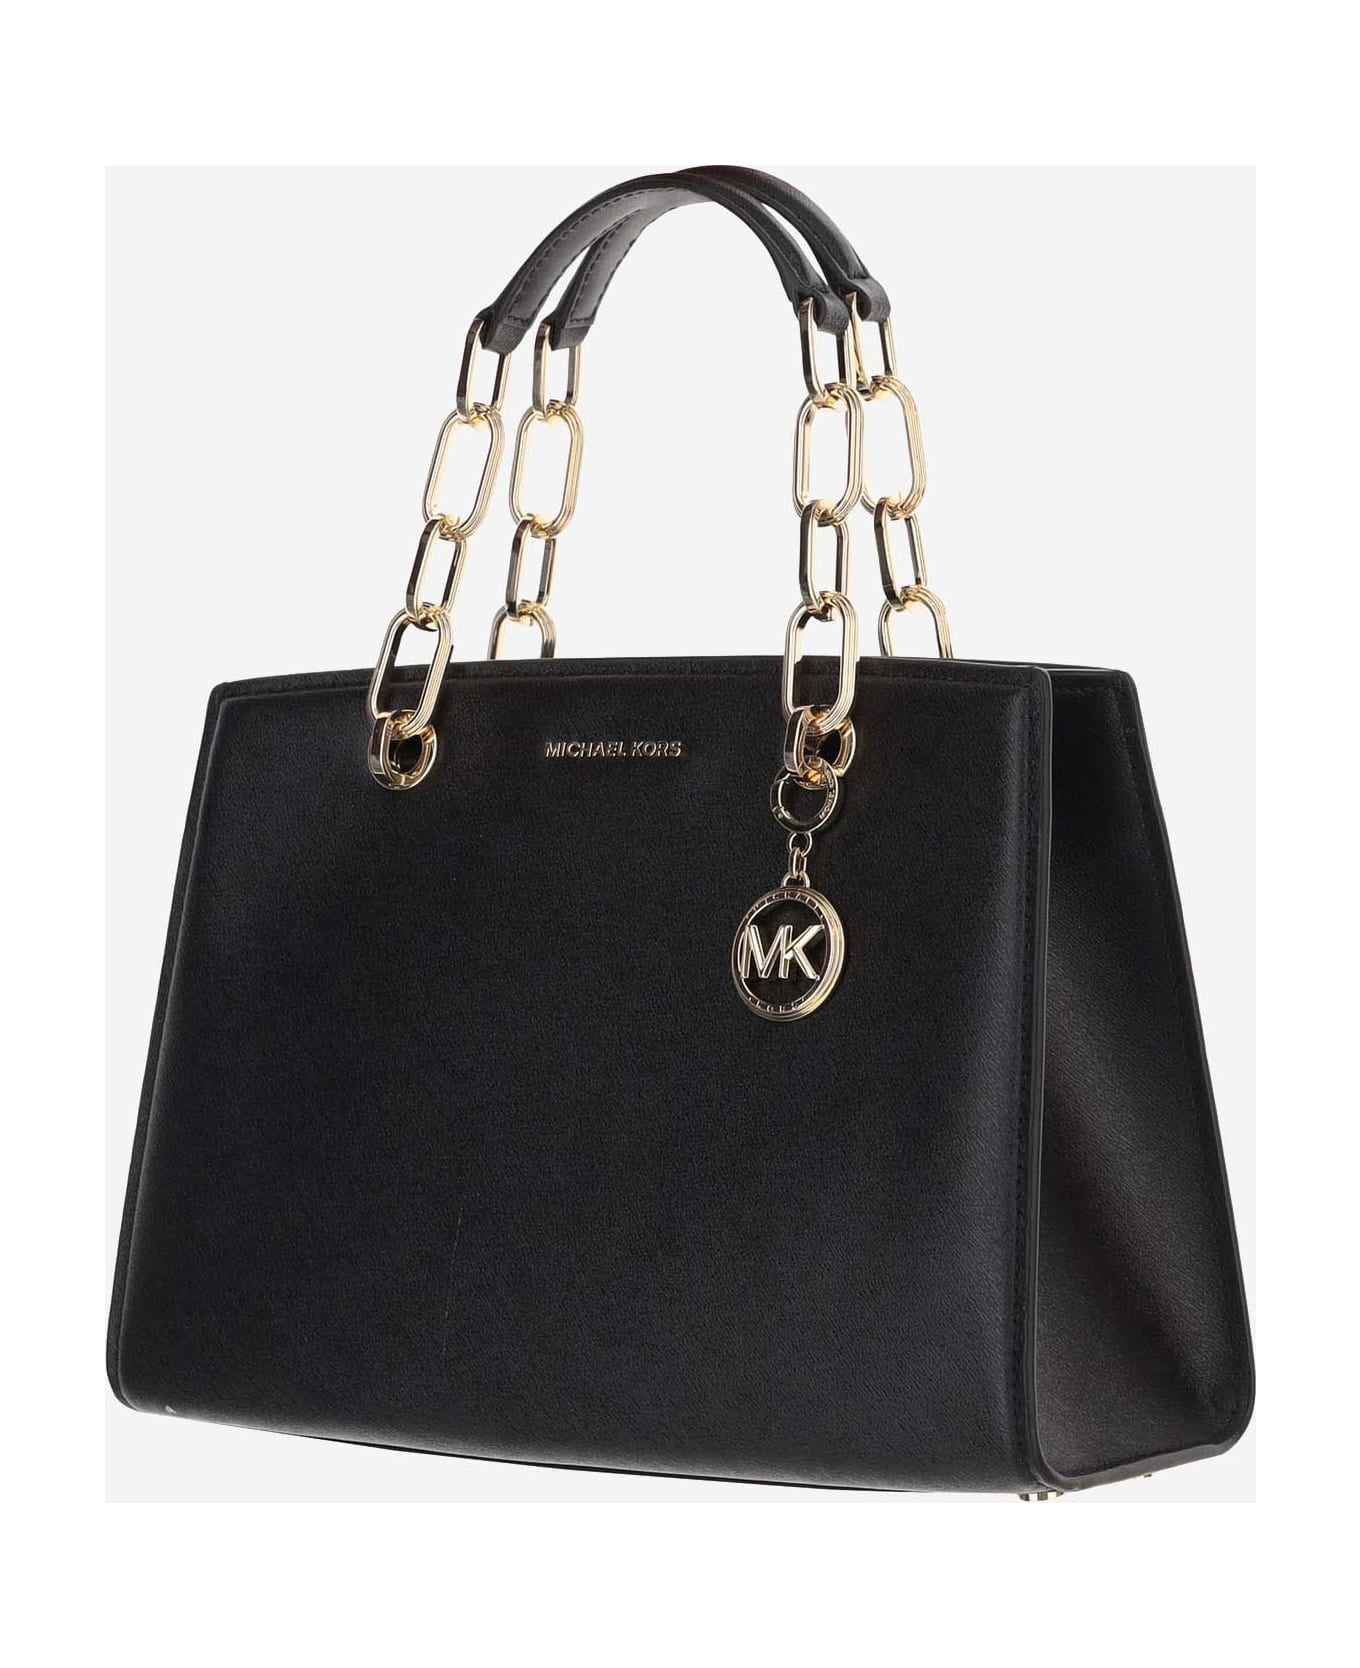 Michael Kors Cynthia Leather Bag - Black